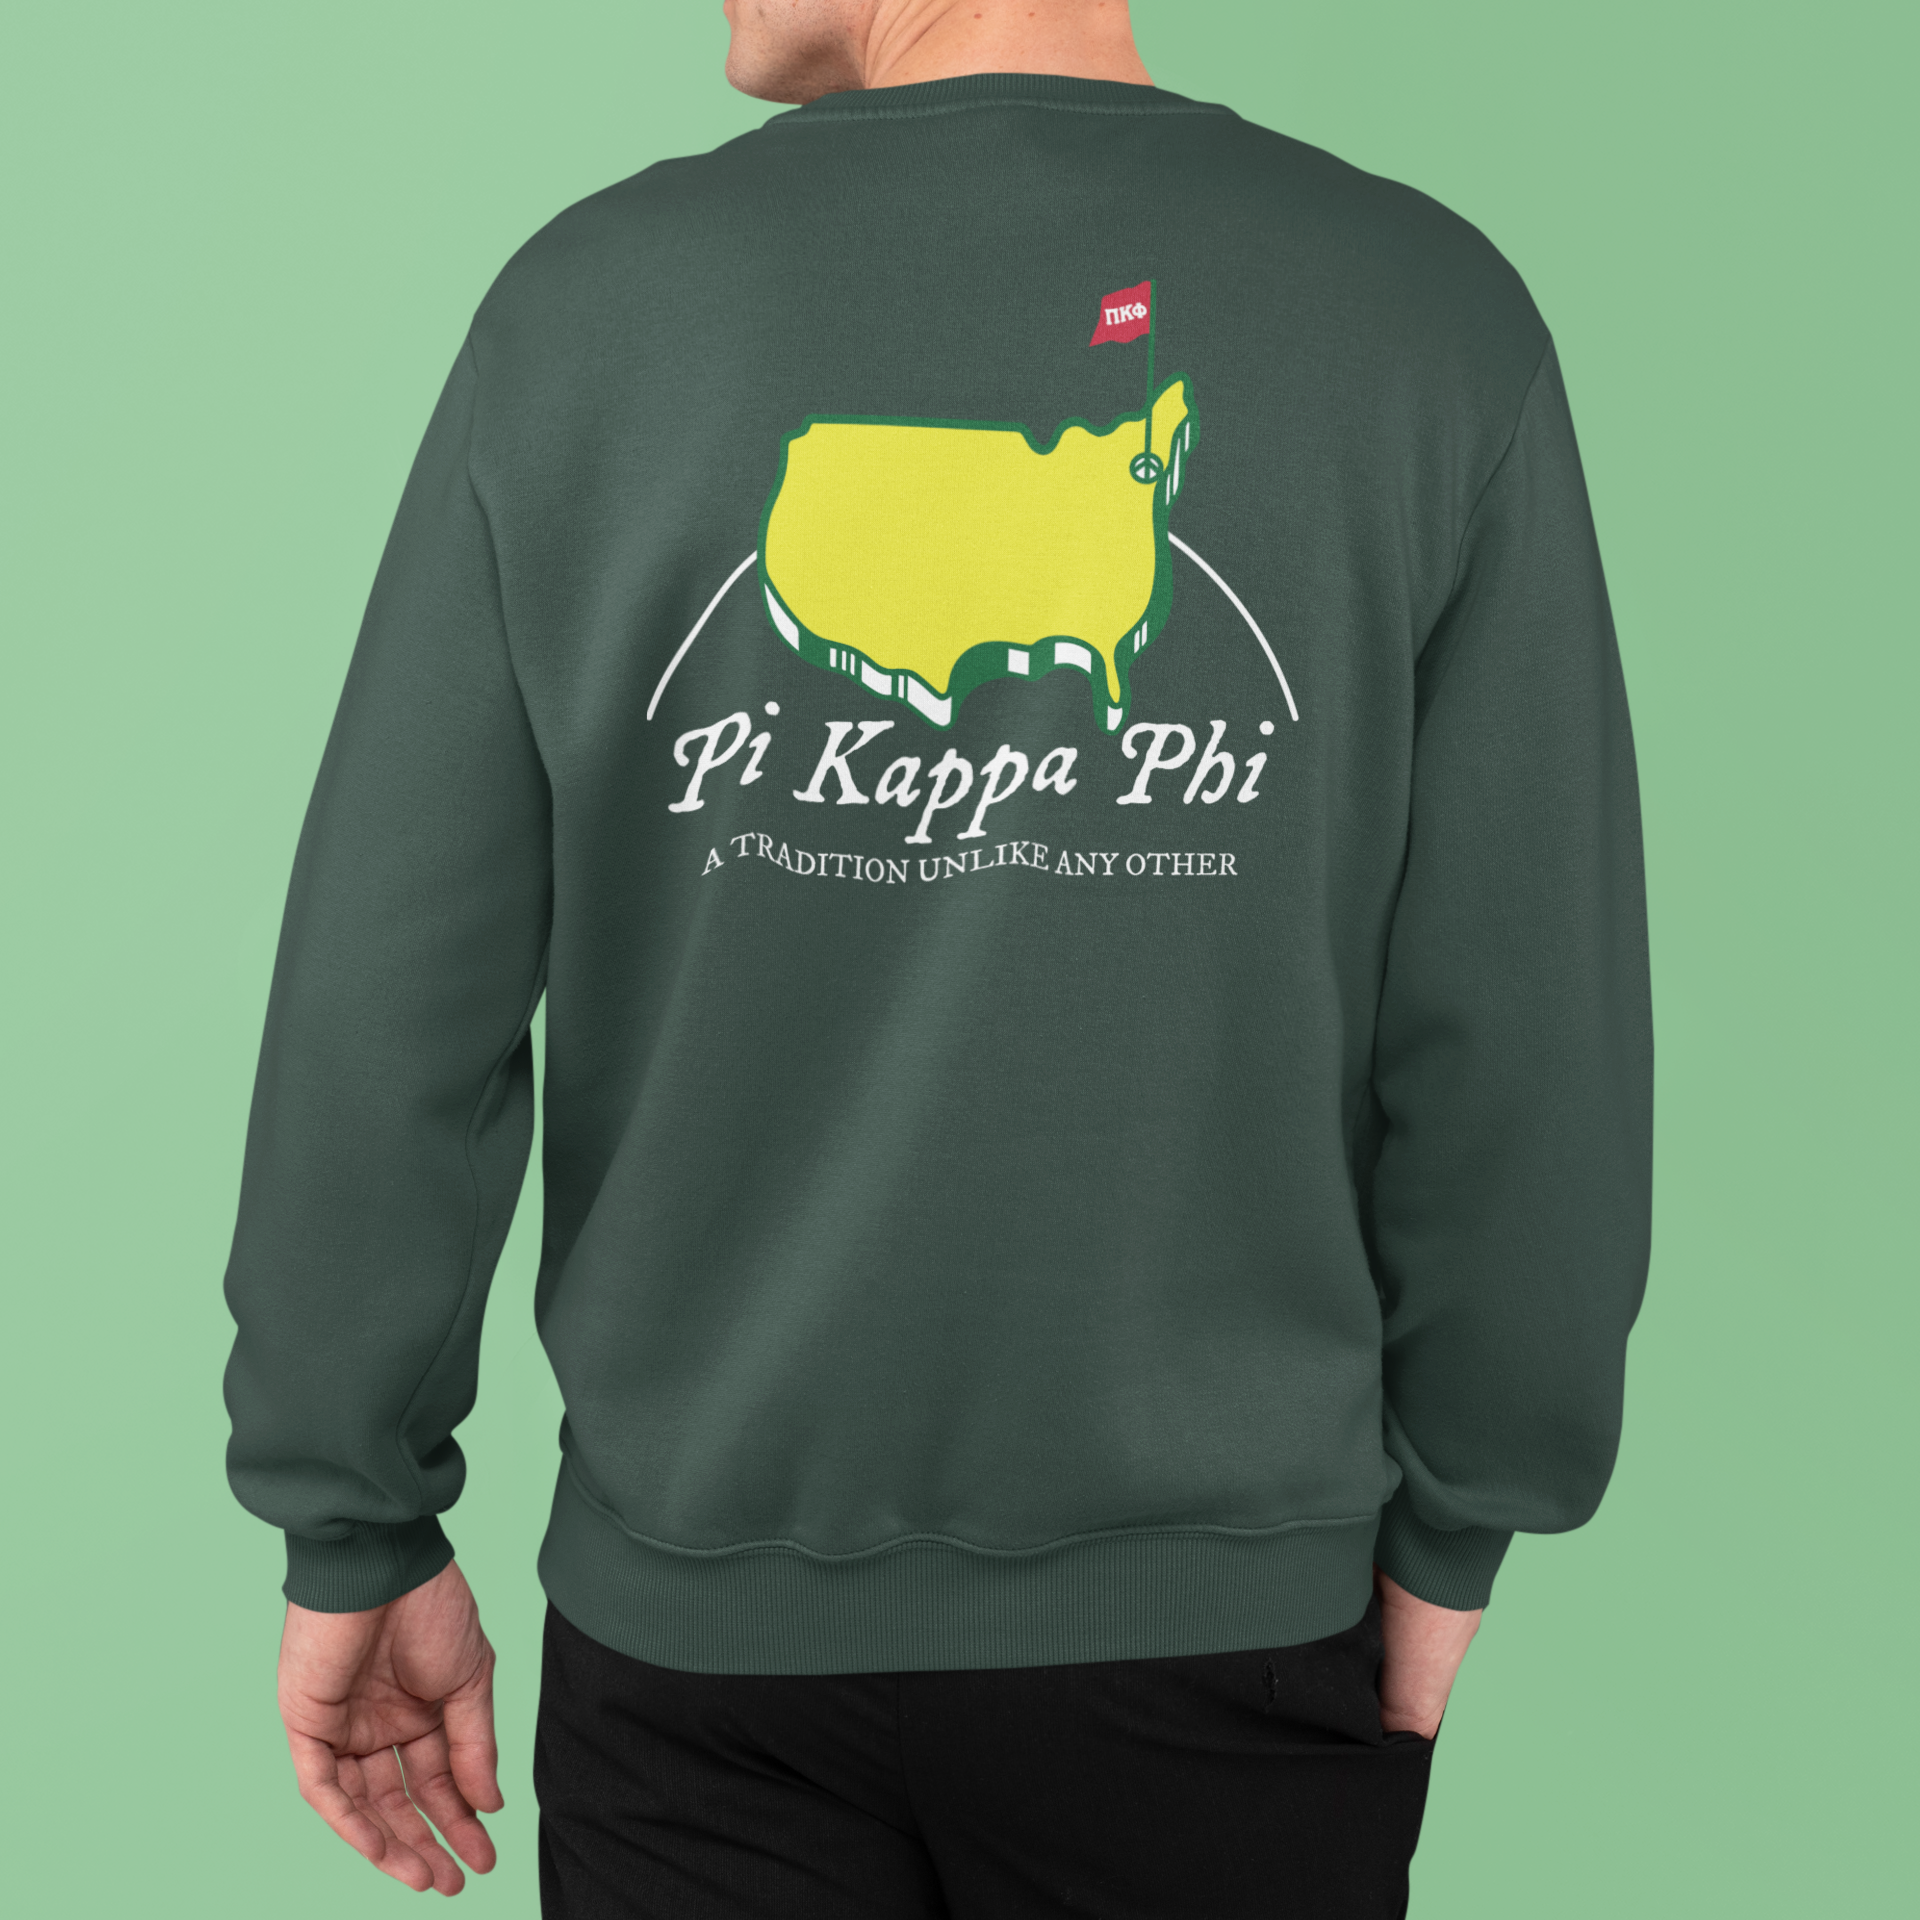 Pi Kappa Phi Graphic Crewneck Sweatshirt | The Masters | Pi Kappa Phi Apparel and Merchandise back model 